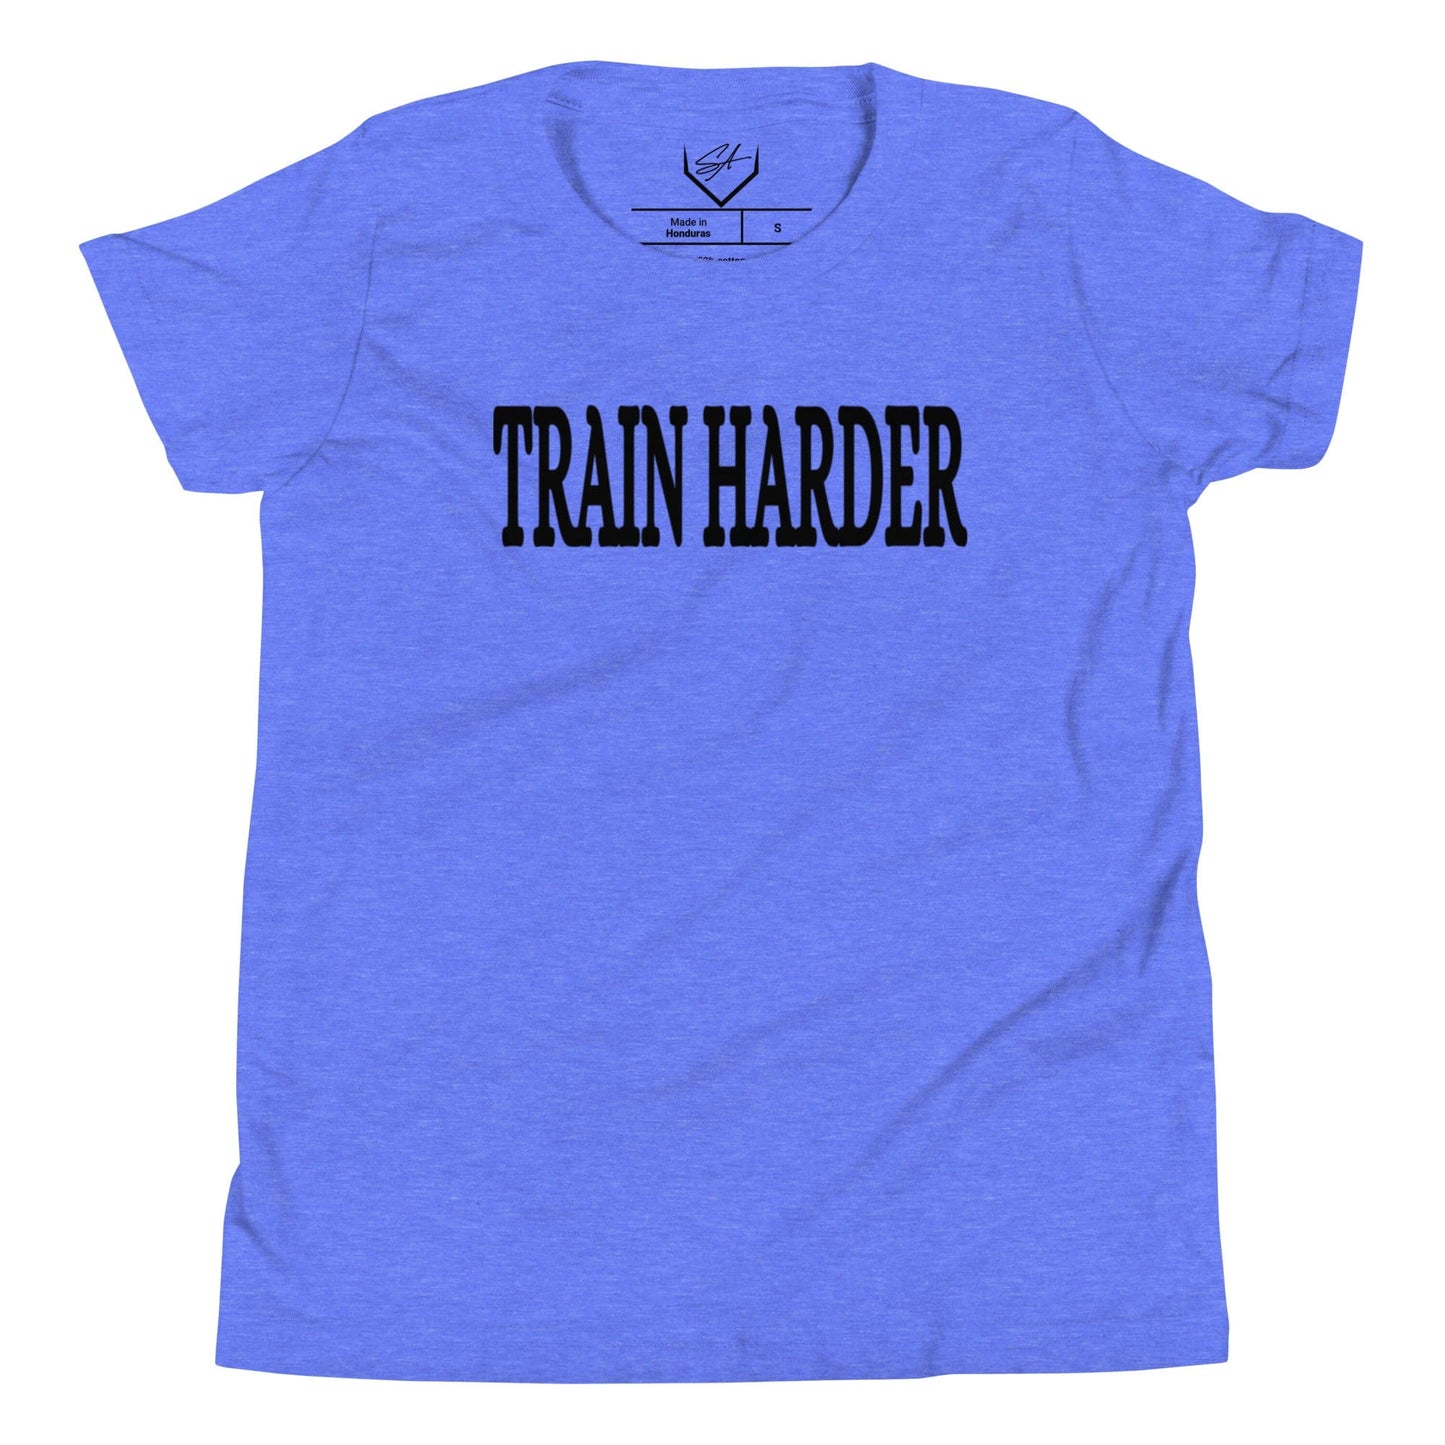 Train Harder - Youth Tee